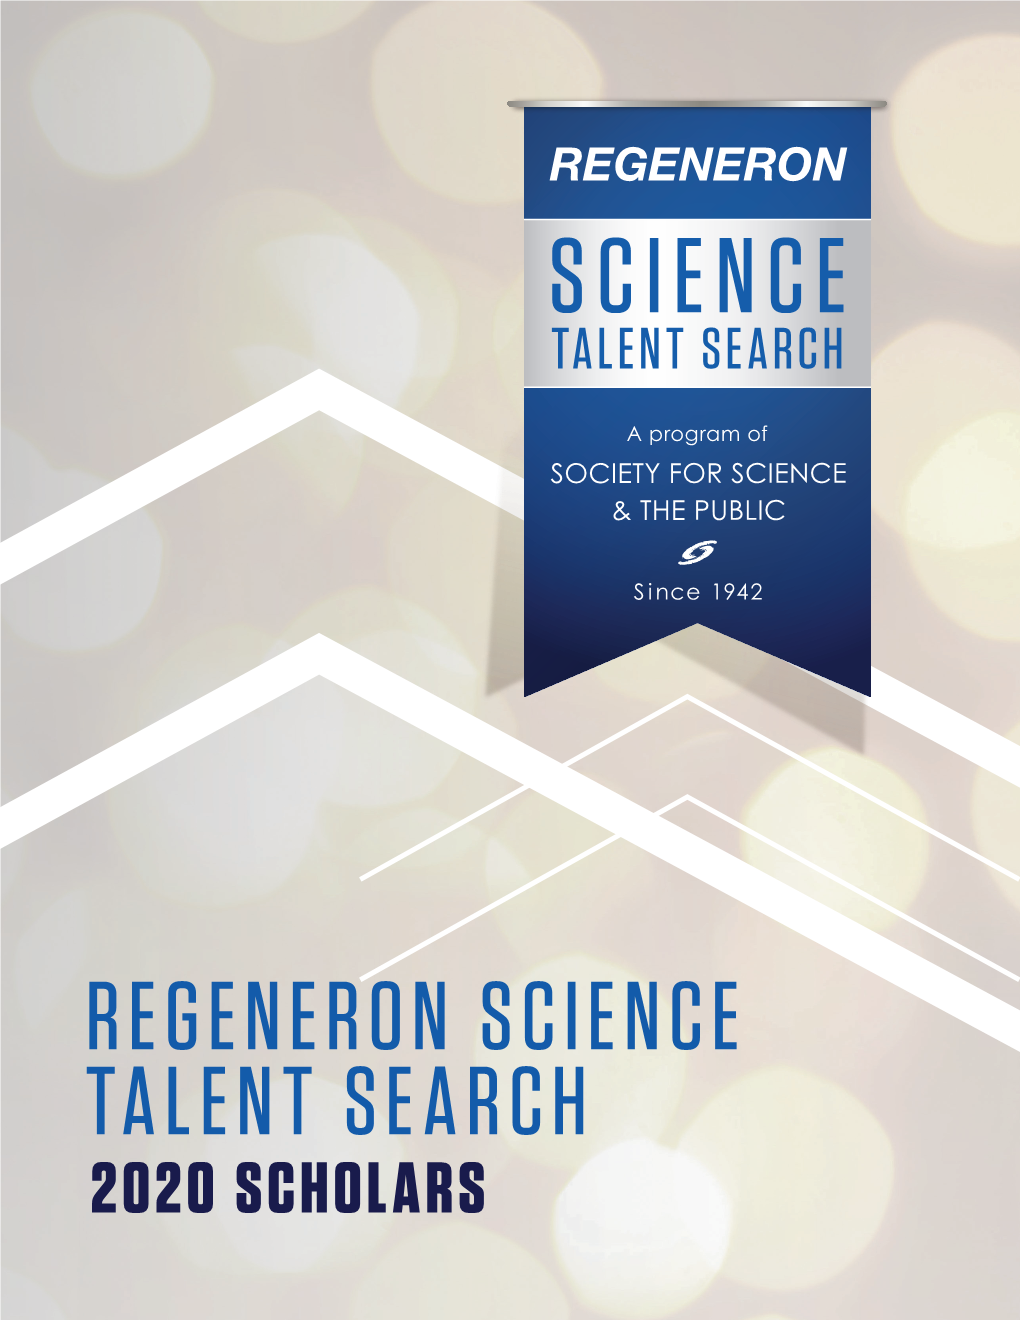 Regeneron Science Talent Search 2020 Scholars 2020 Scholars